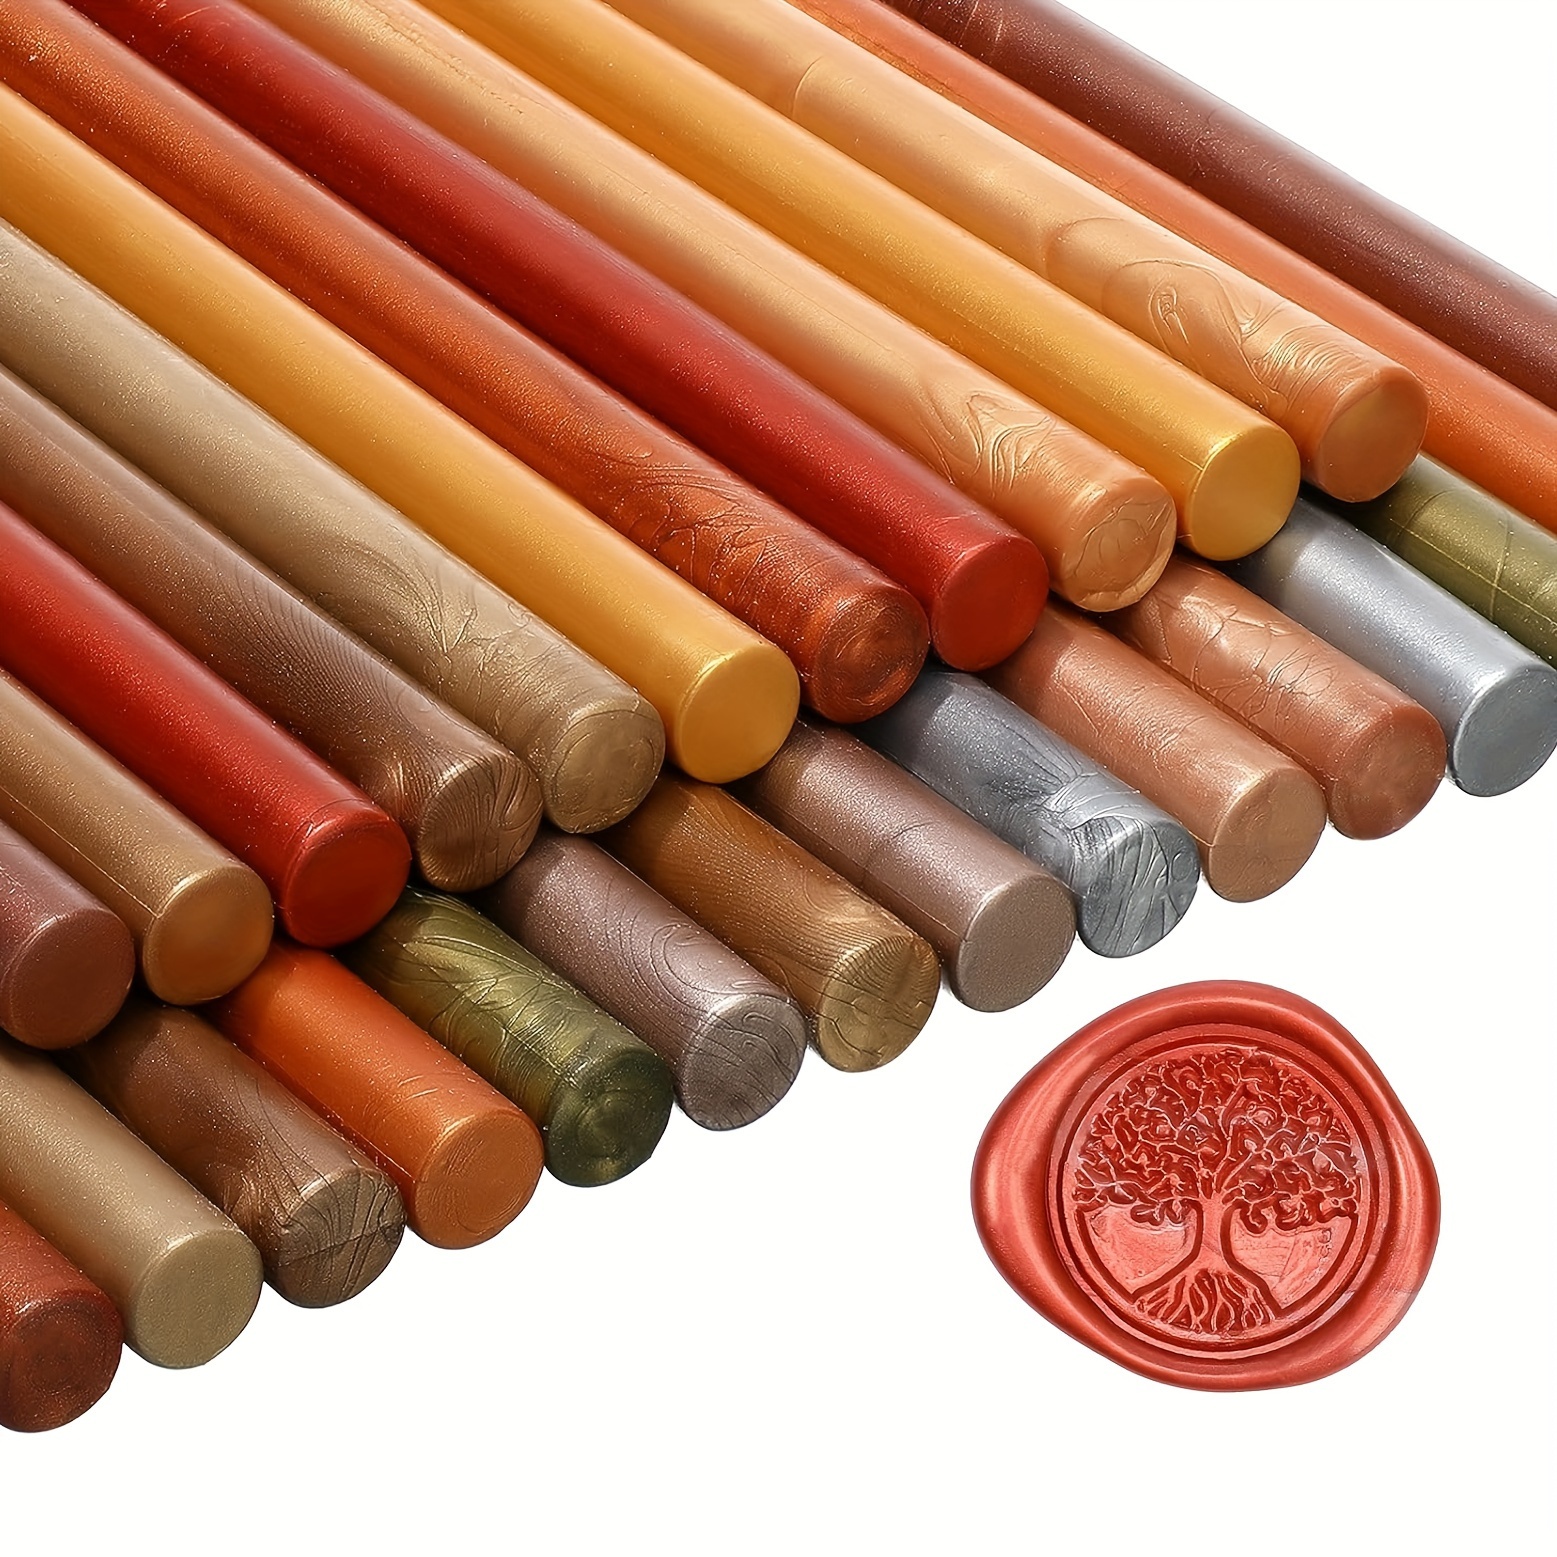 Rose Gold Wax Seal Sticks, 20pcs Wax Sealing Sticks for 0.43 Glue Gun, Wax Seal